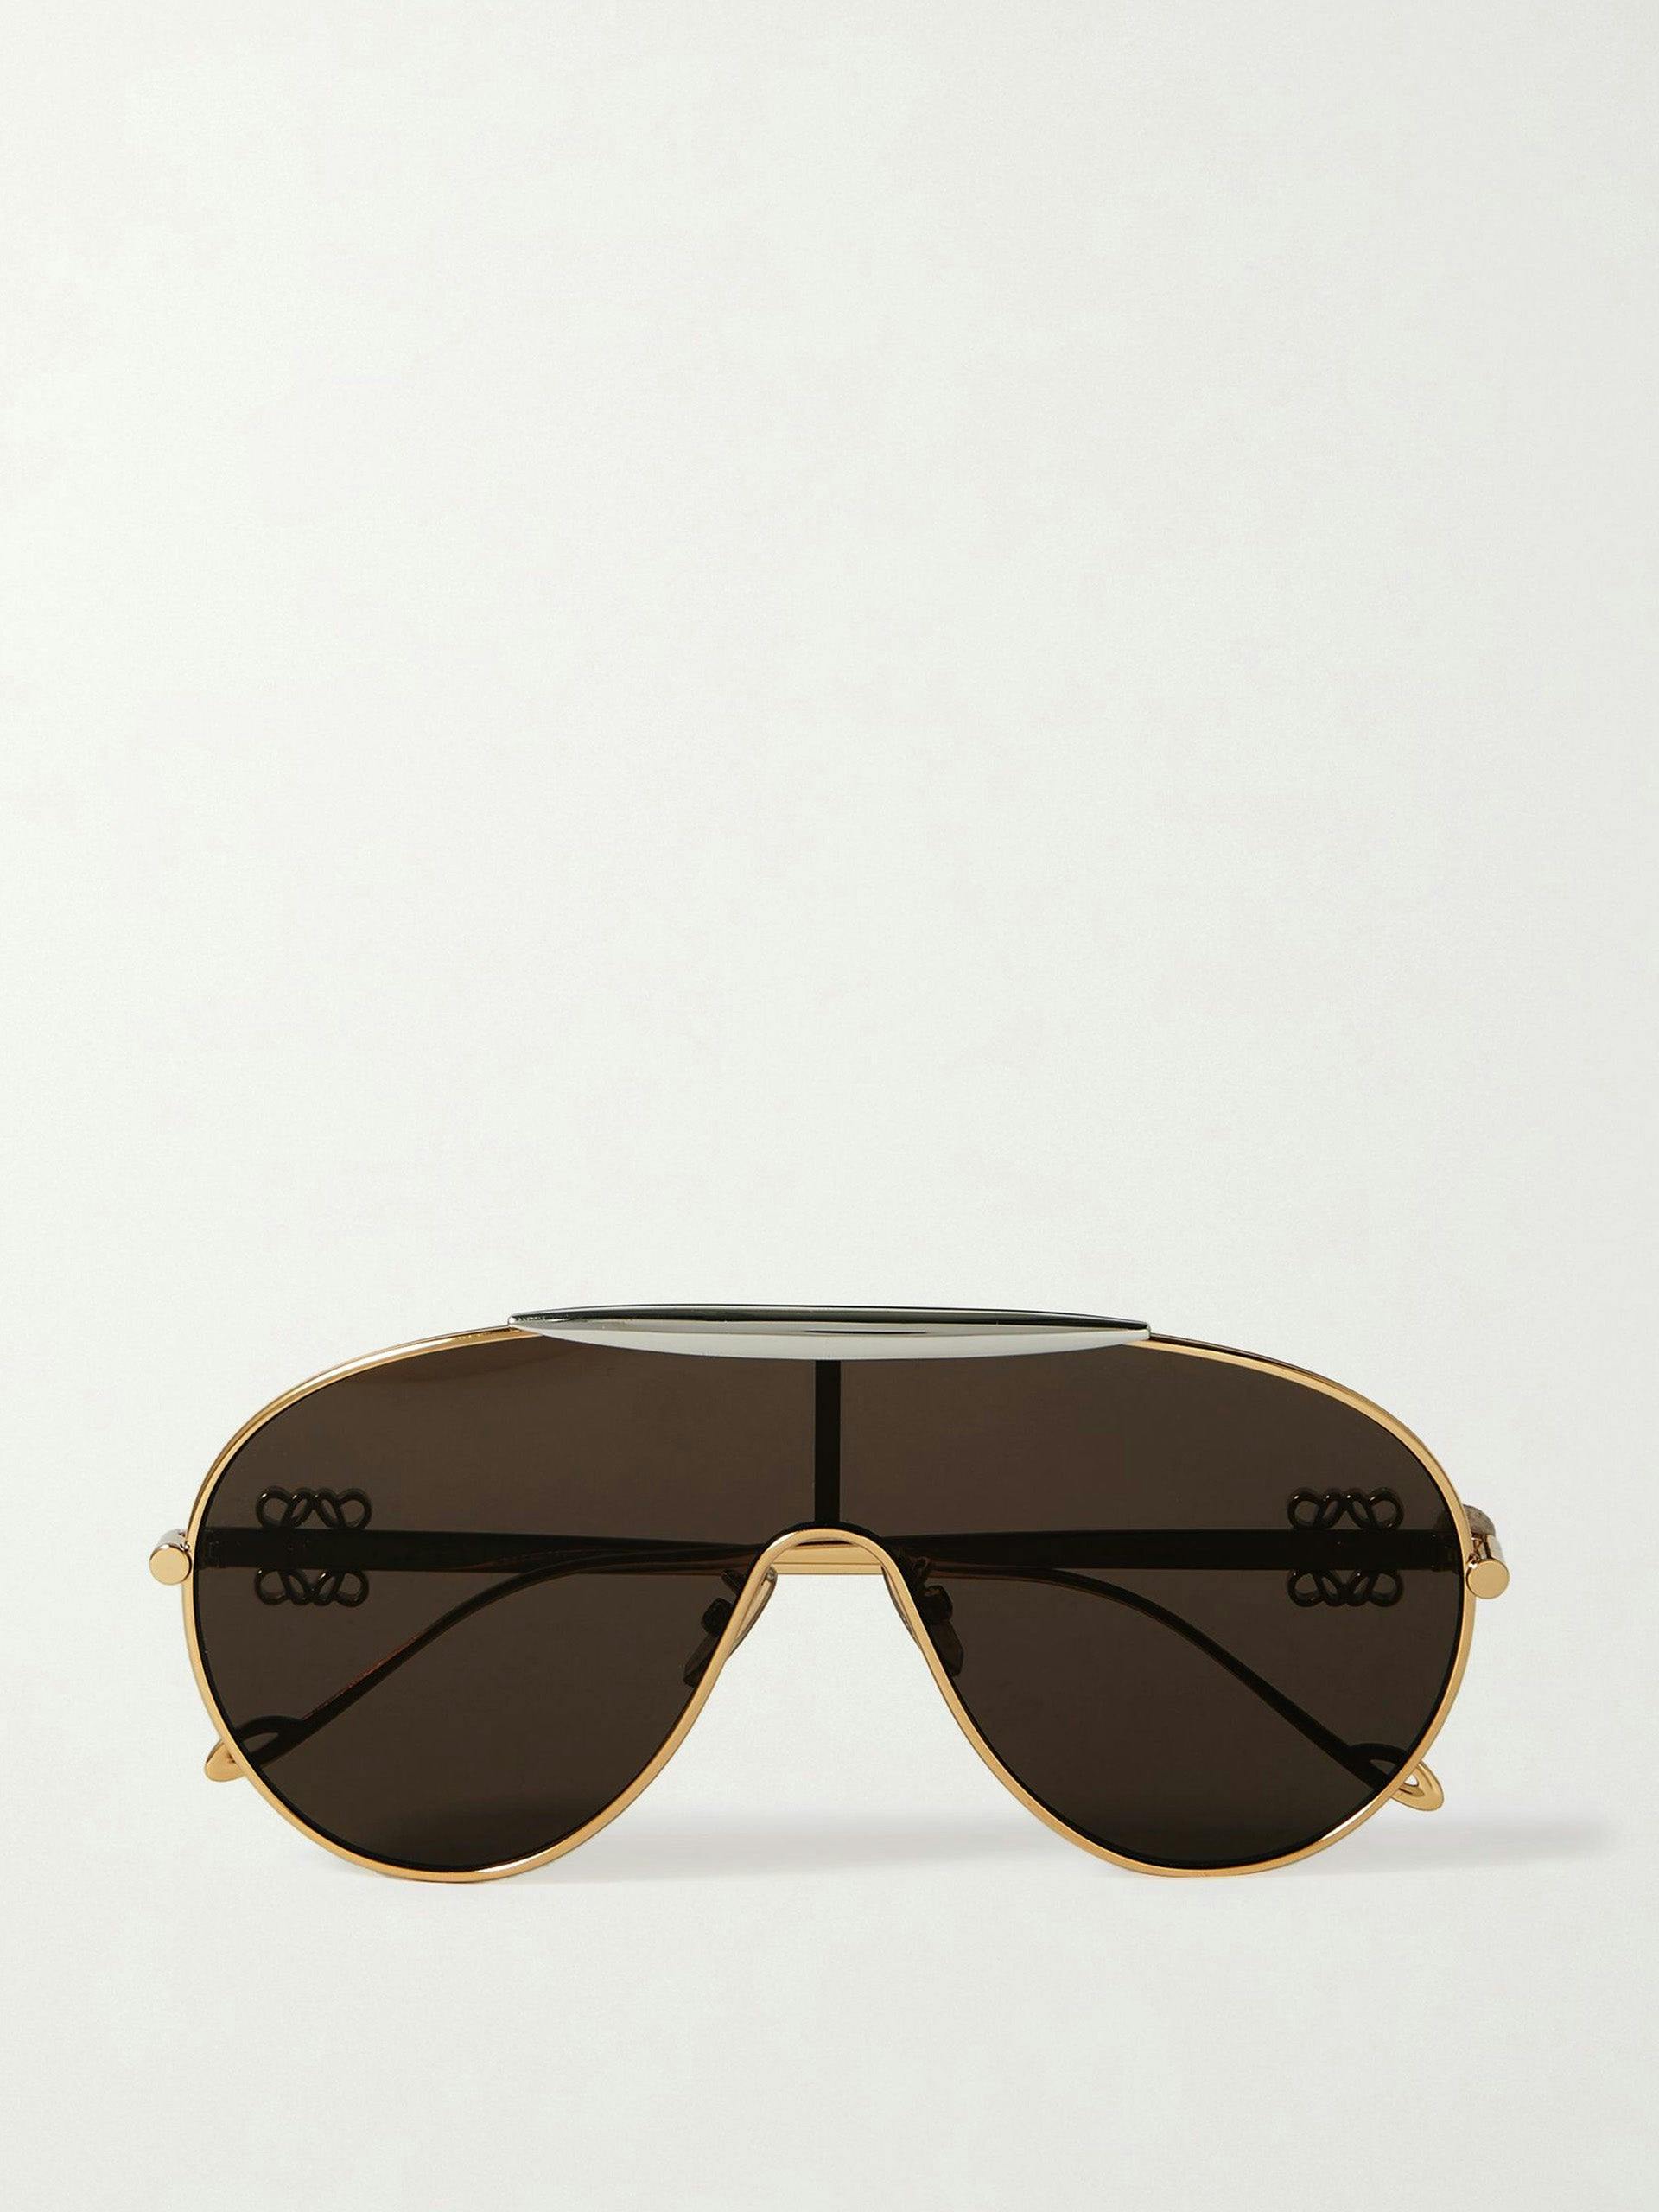 Oversized aviator-style sunglasses